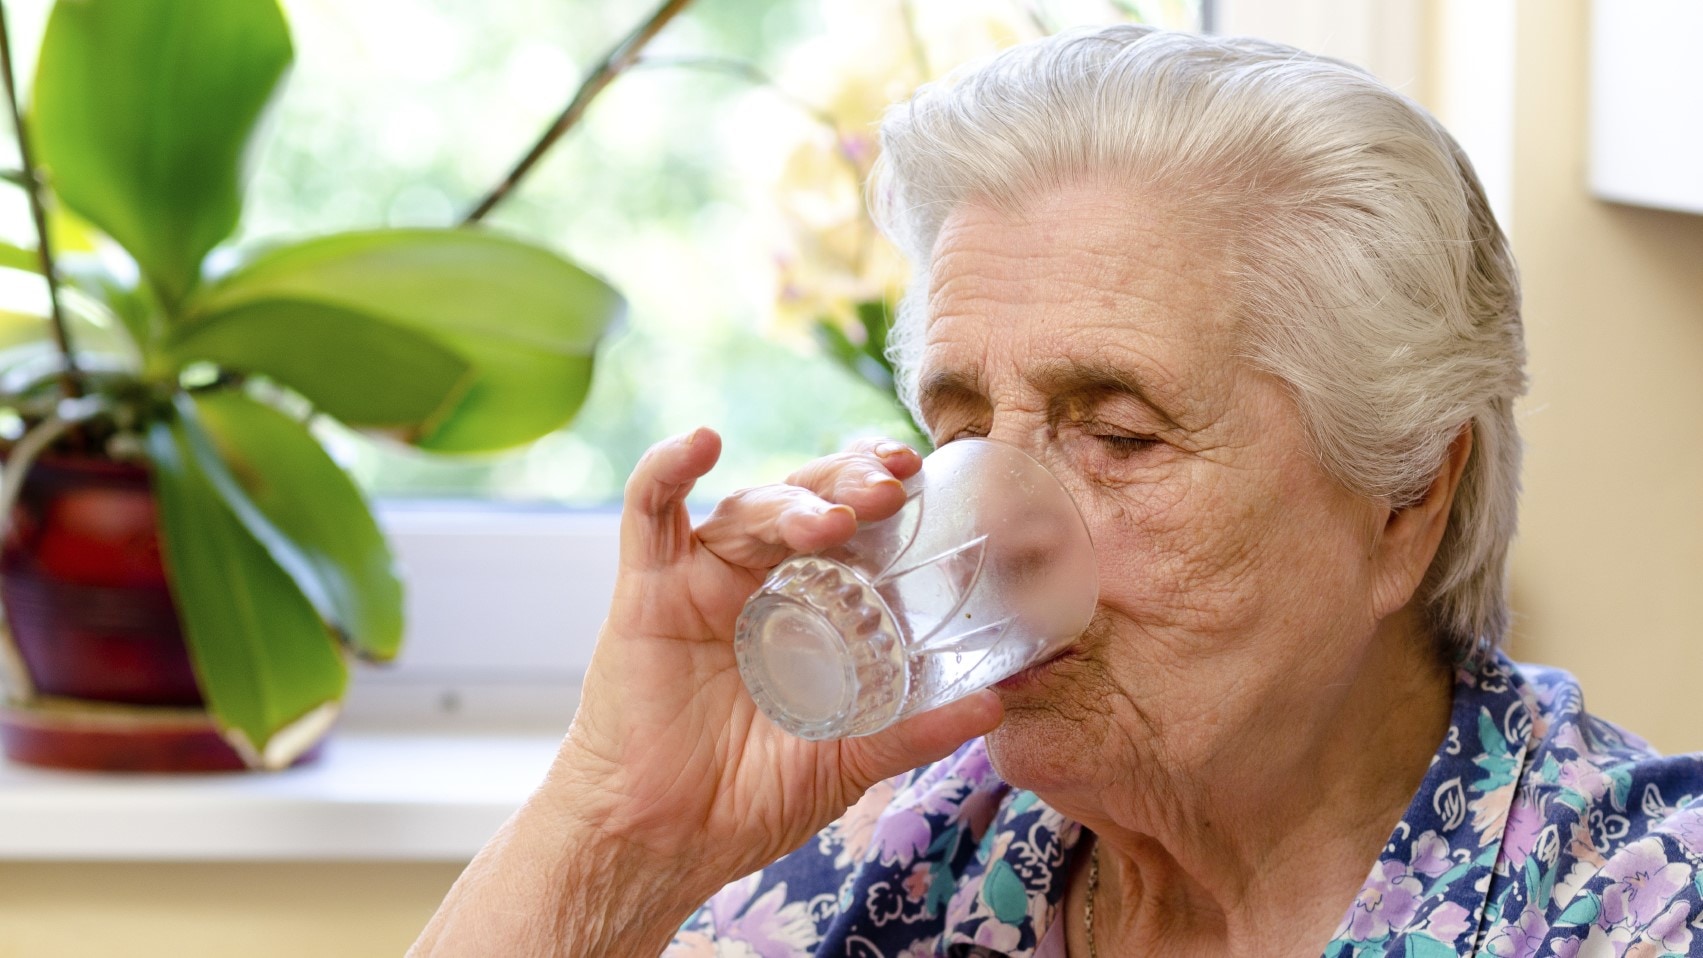 Elderly woman drinking a glass of water.